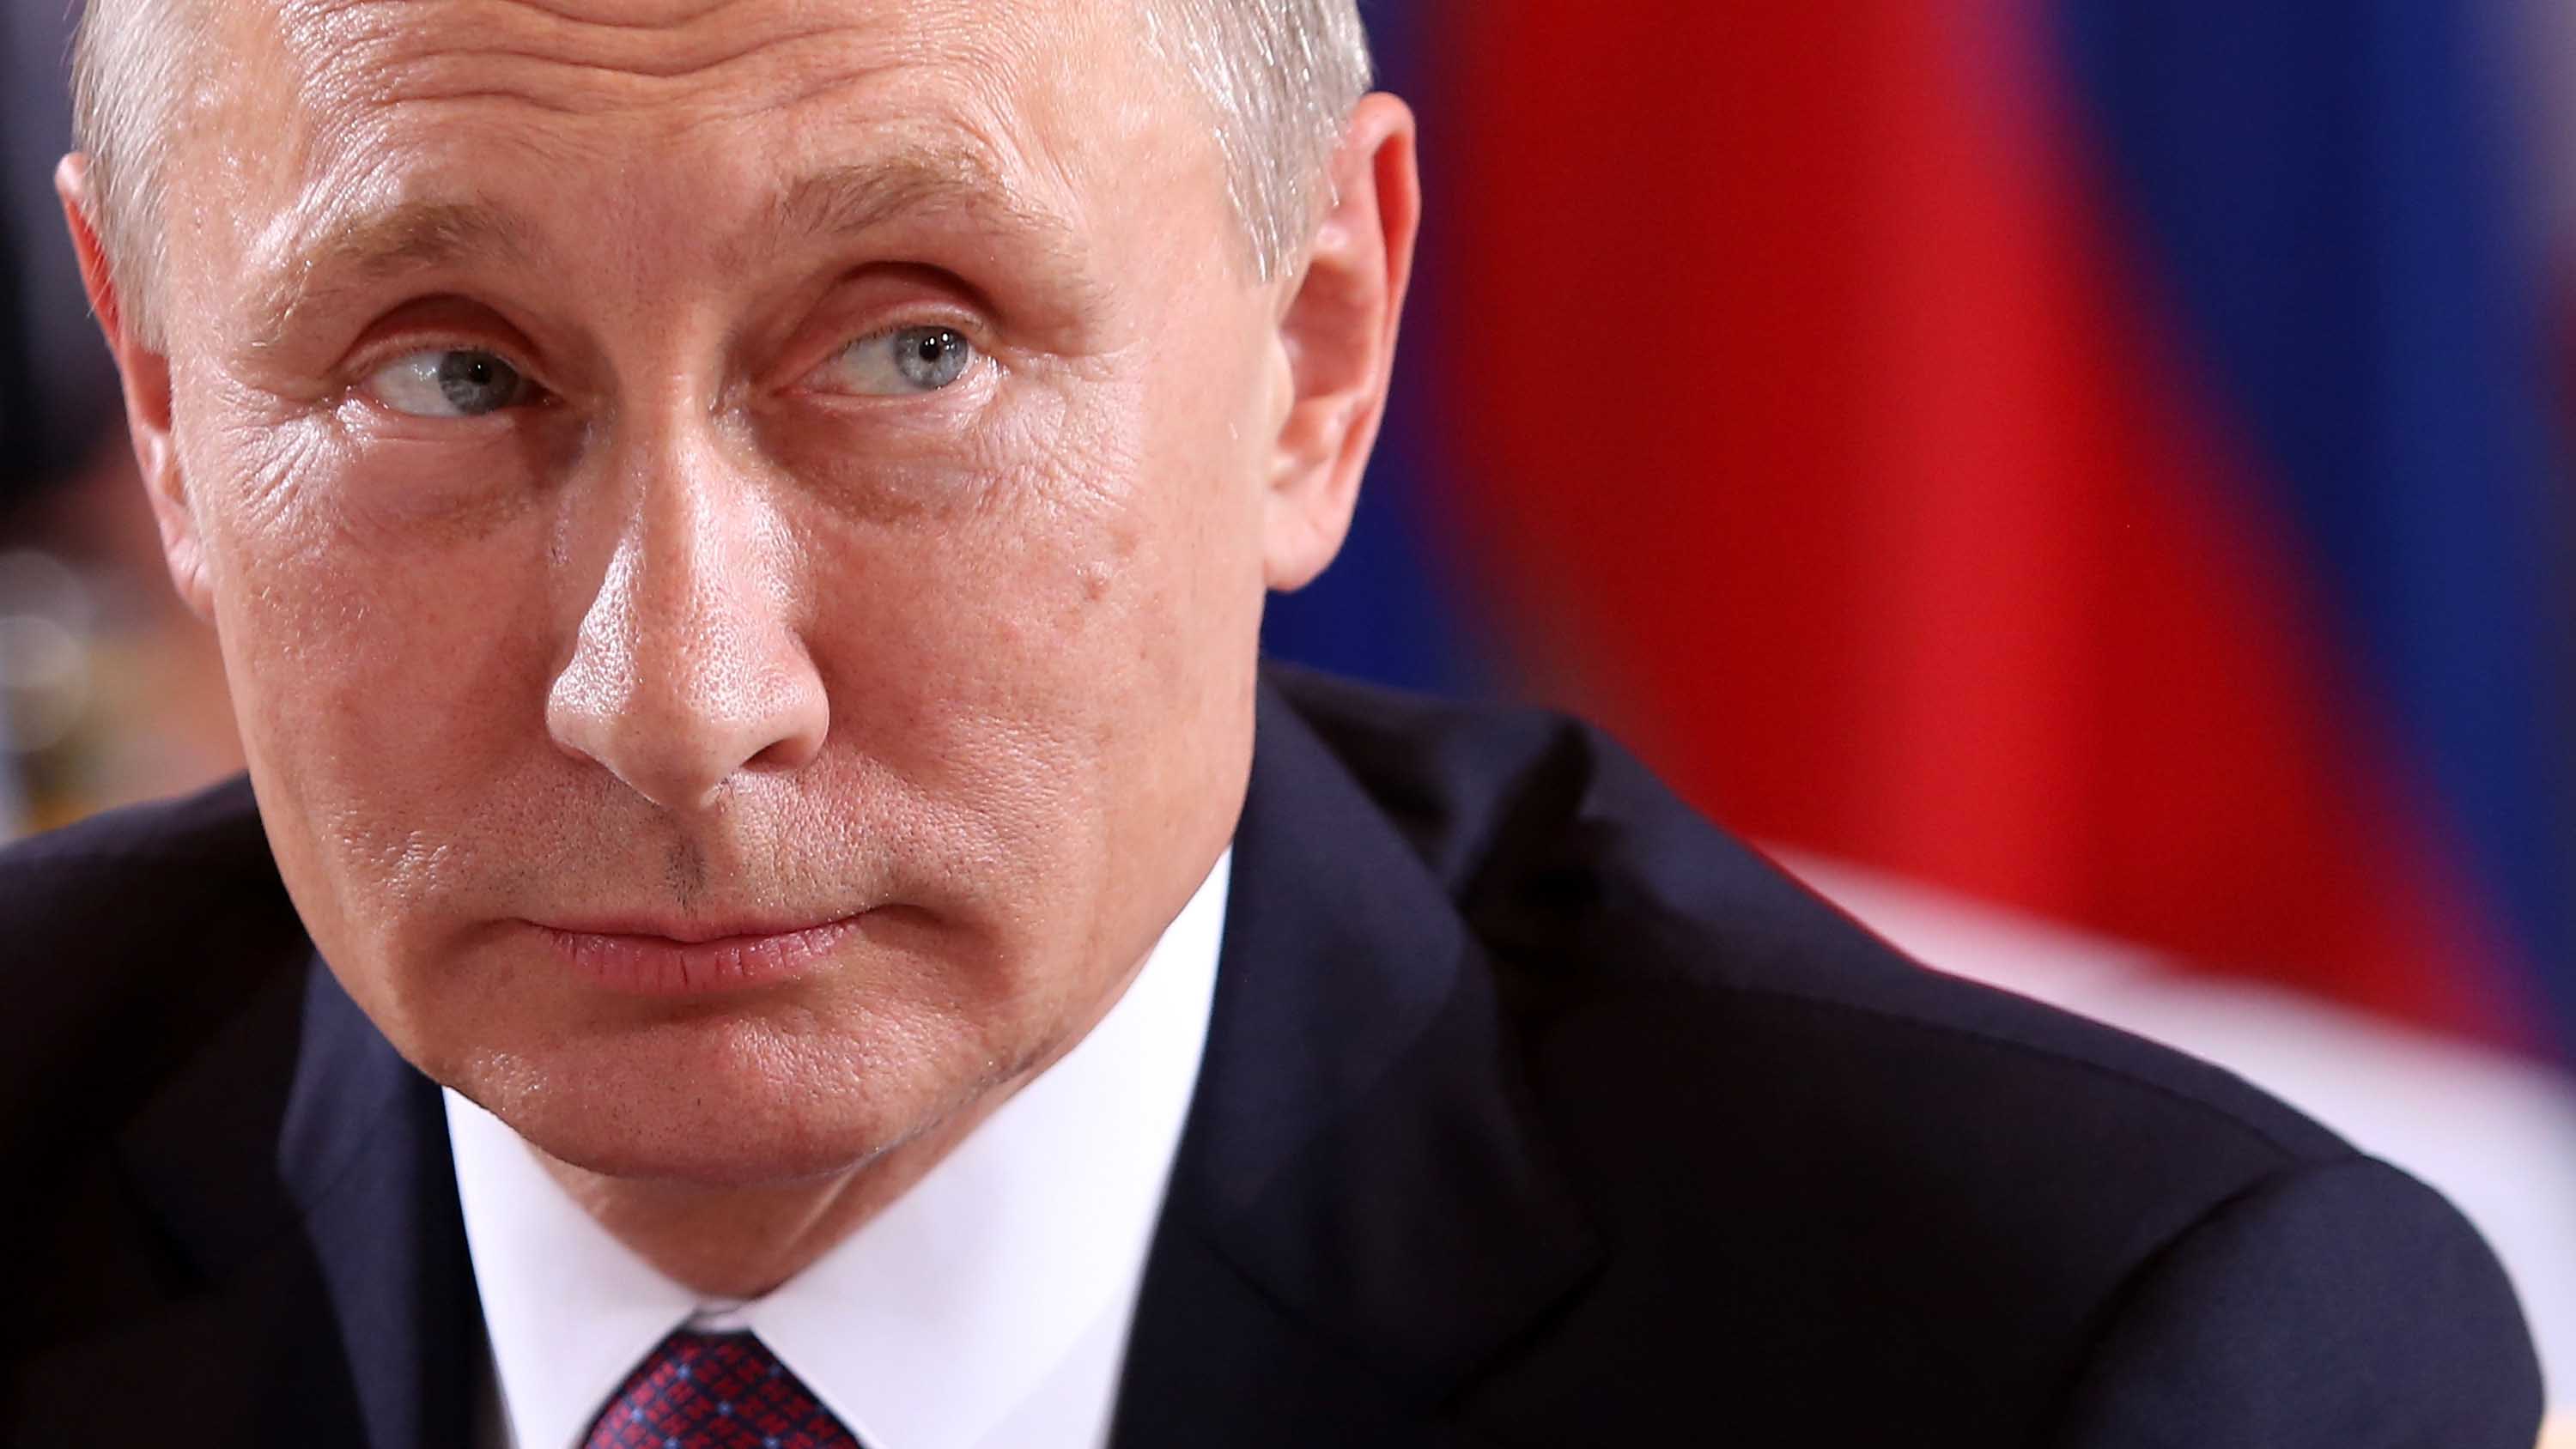 EEUU responde a la temible amenaza de Putin